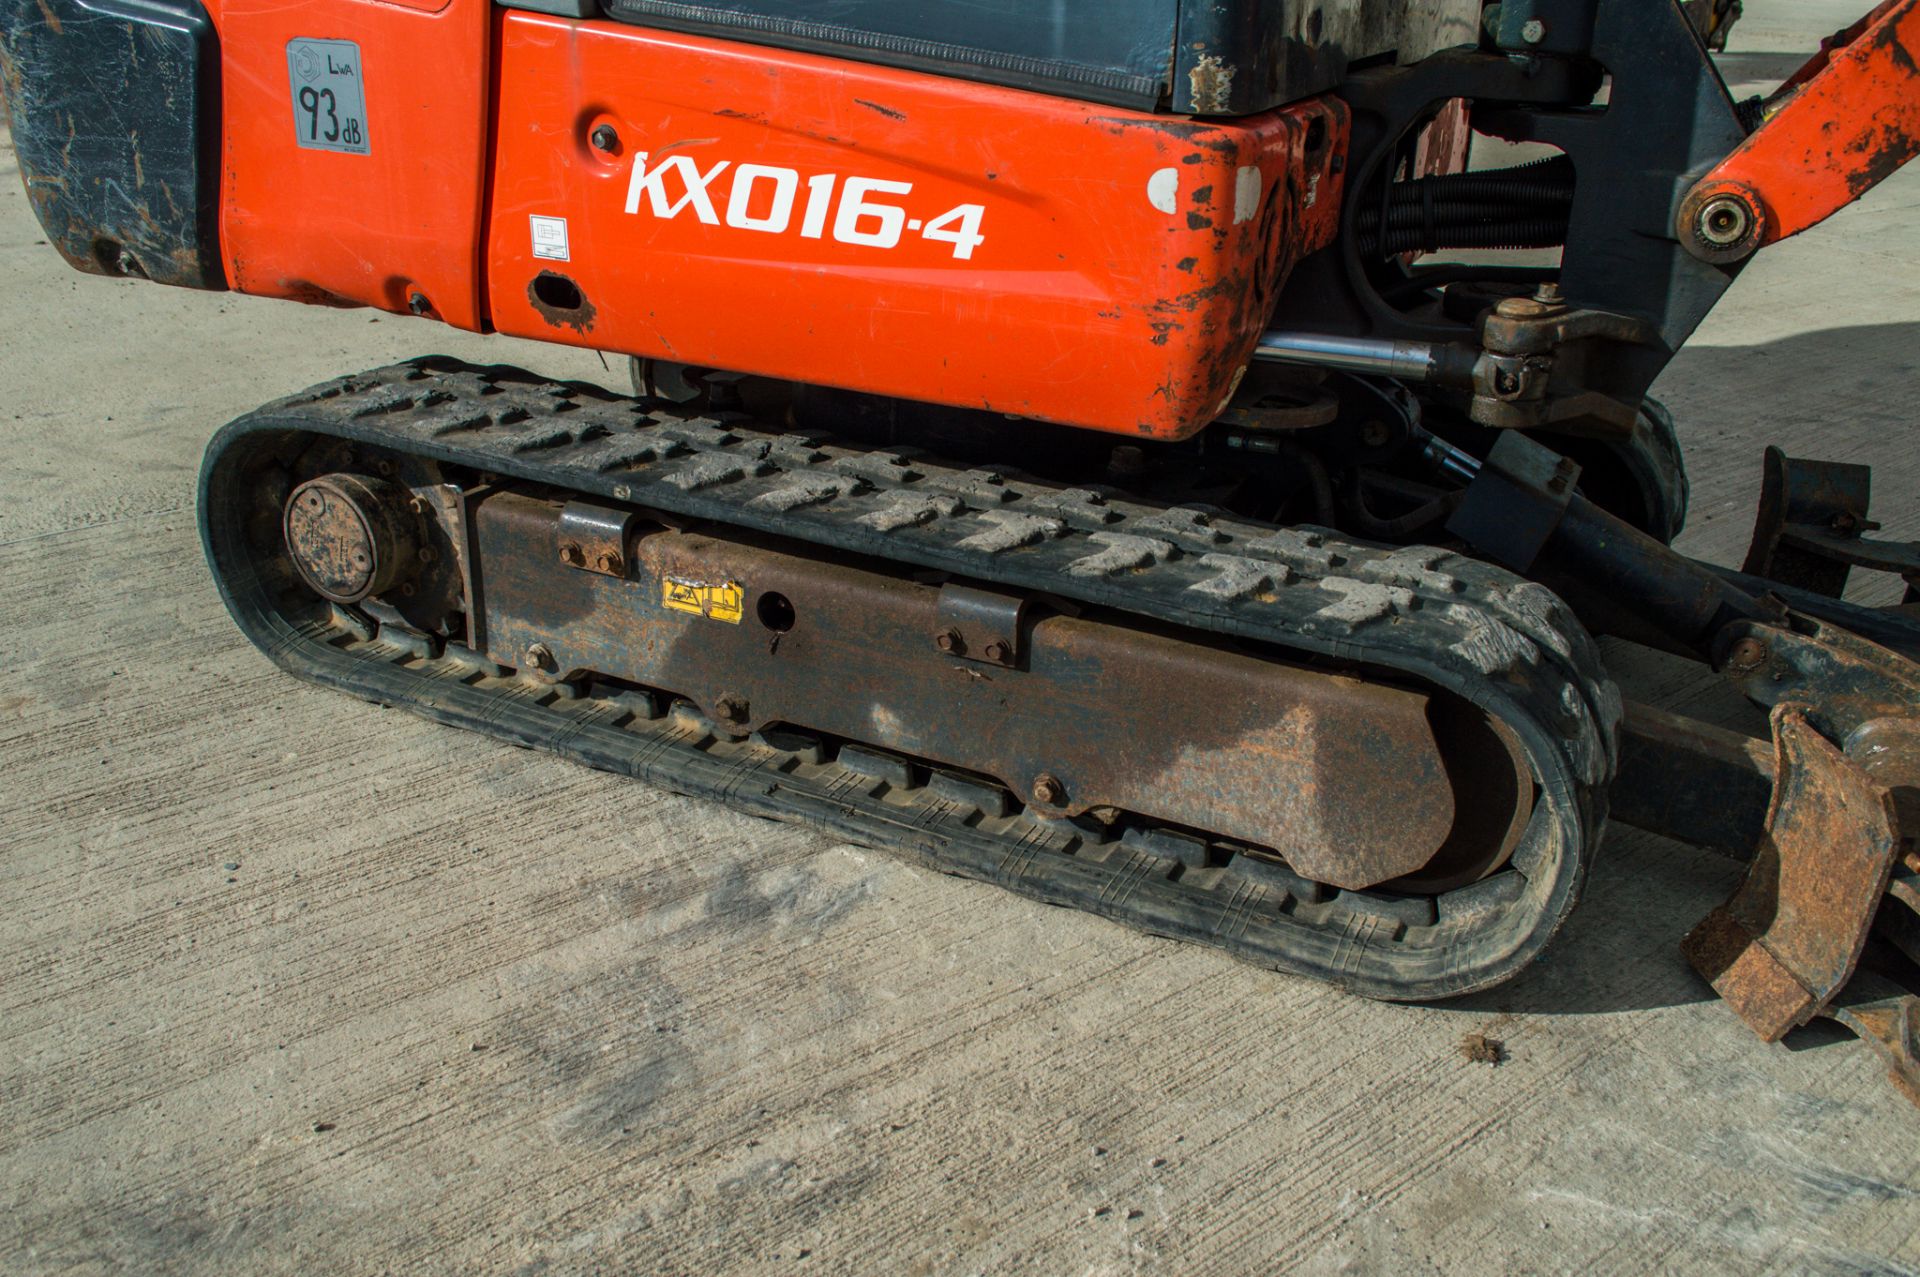 Kubota KX016-4 1.6 tonne rubber tracked mini excavator Year: 2014 S/N: 57612 Recorded Hours: 2624 - Image 9 of 19